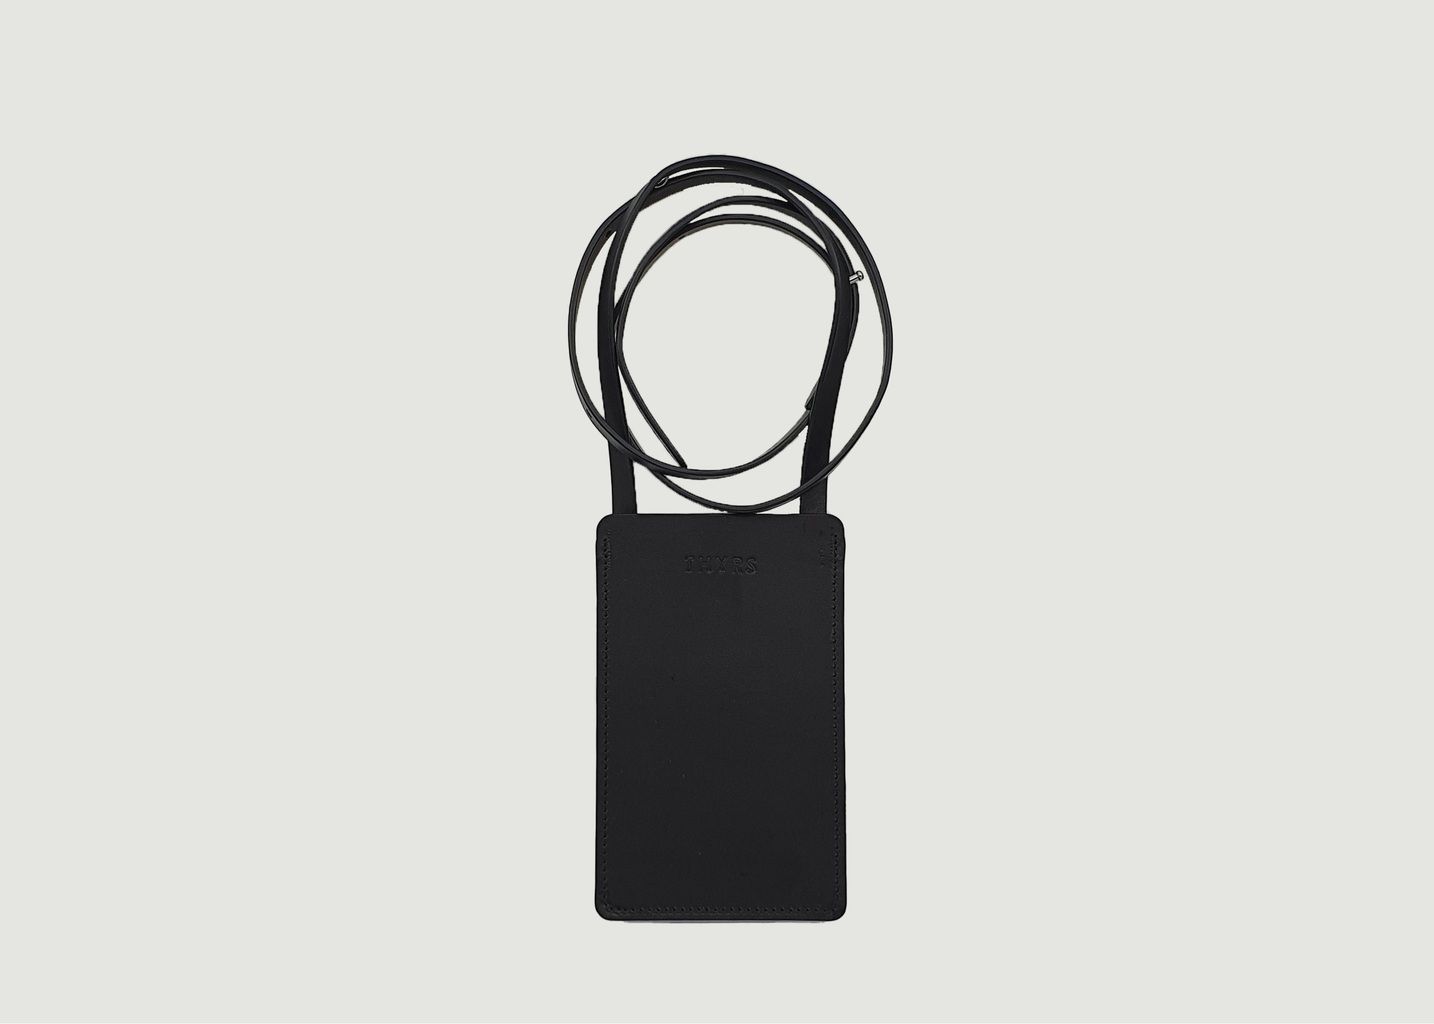 Leather phone holder - Thyrs